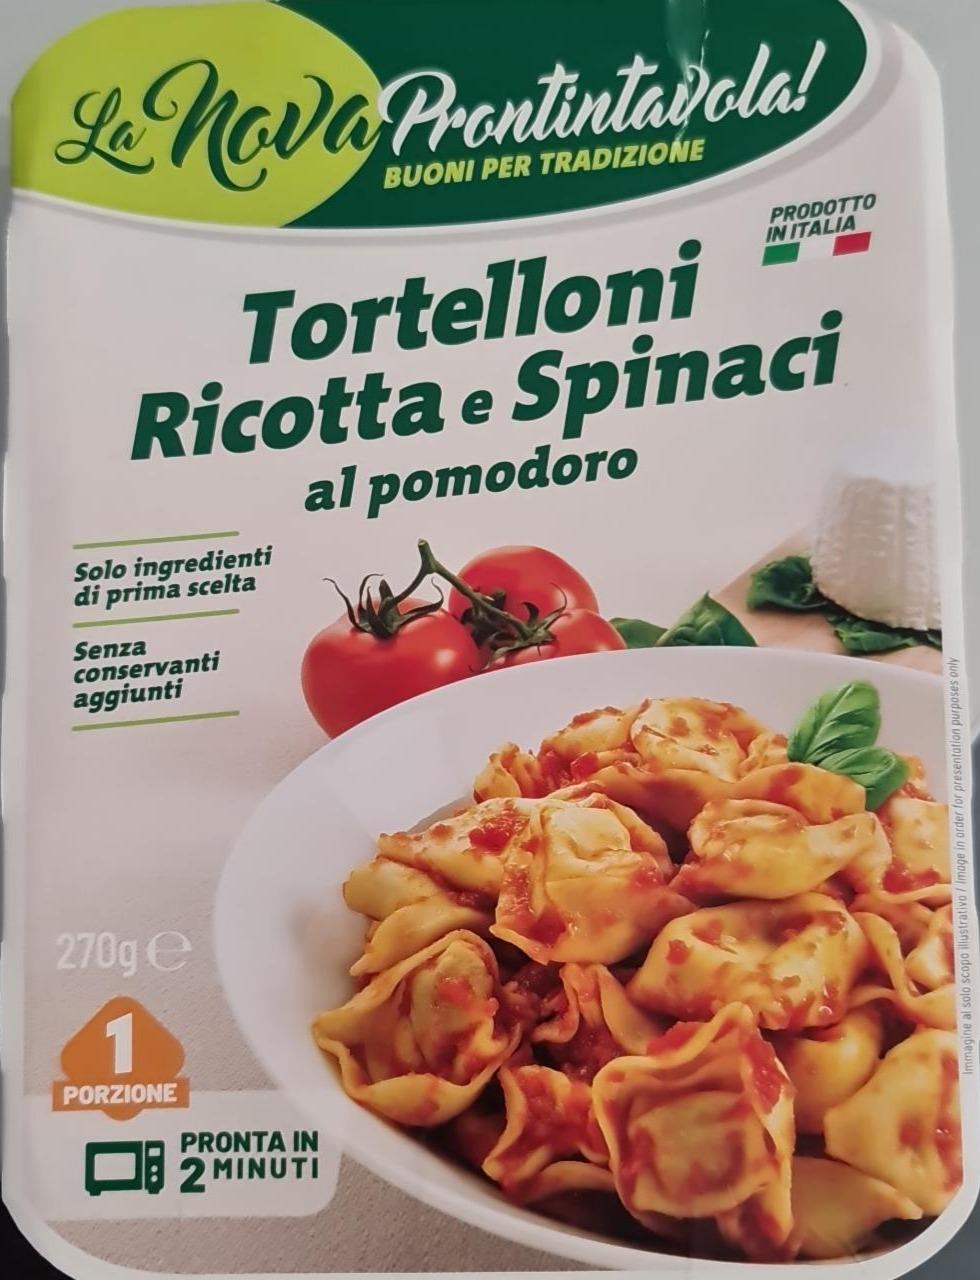 Fotografie - Tortelloni ricotta e spinaci al pomodoro La Nova Prontintavola